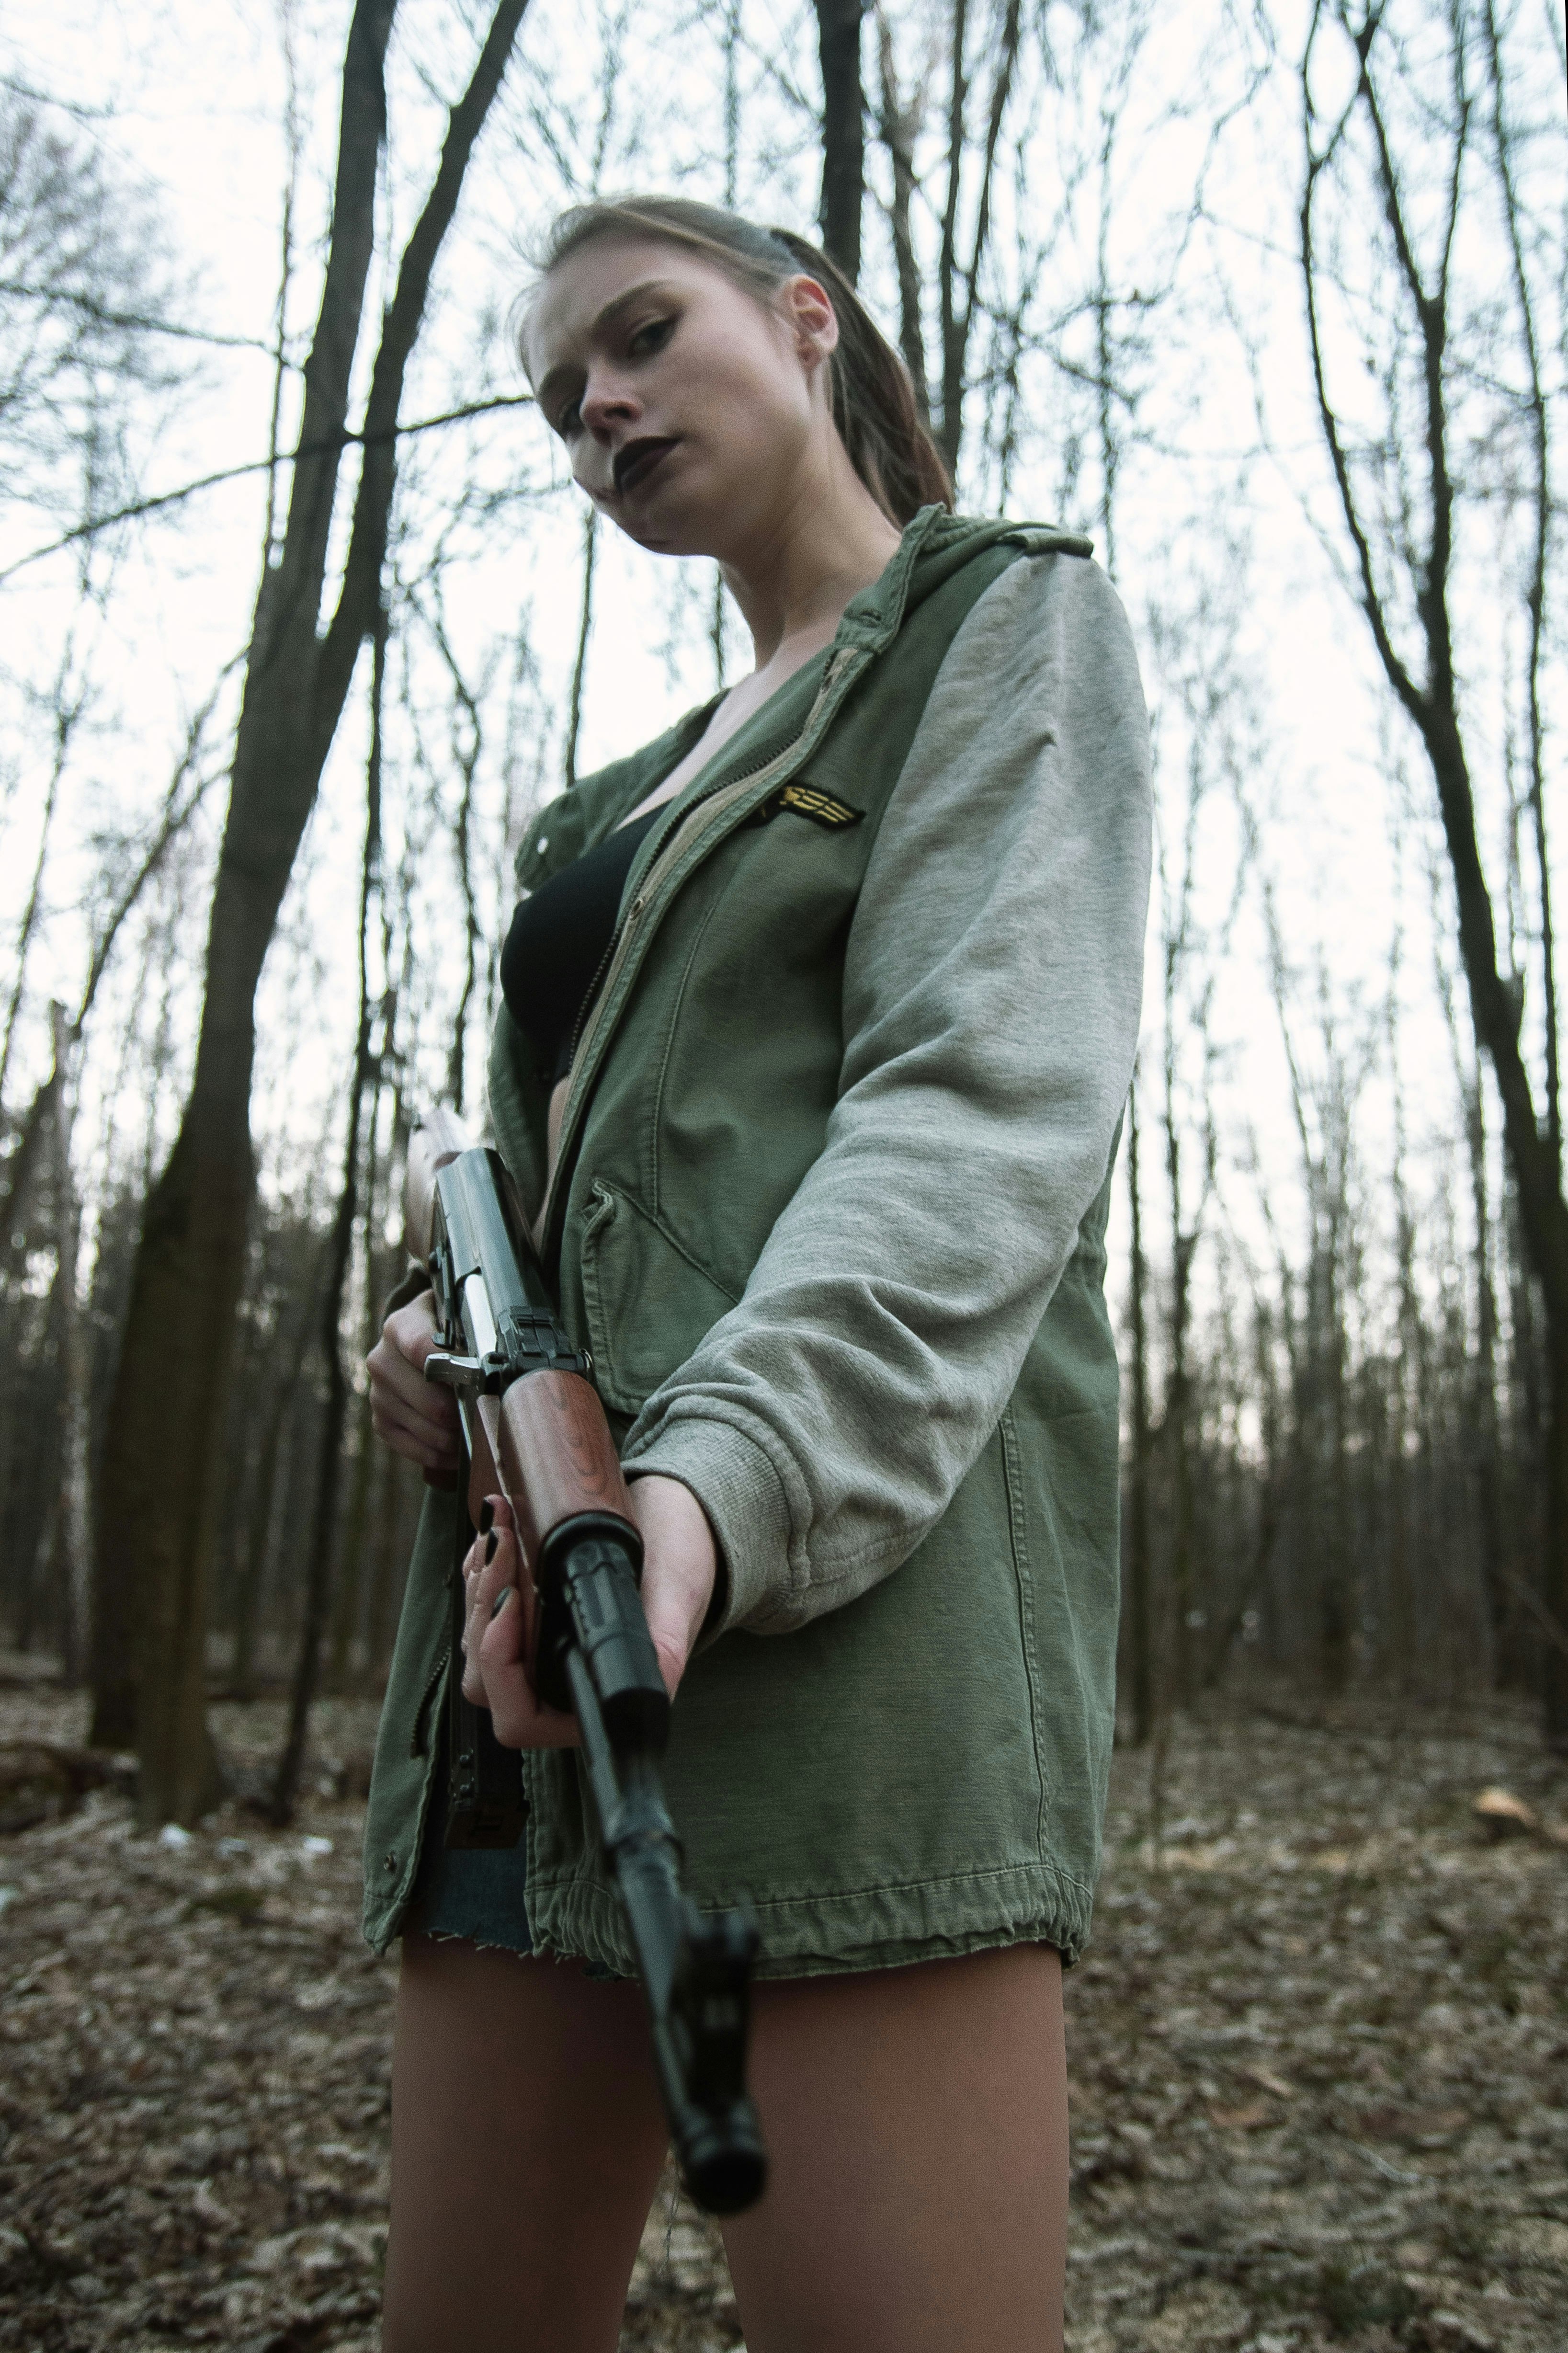 dorian crowder share pics of girls with guns photos